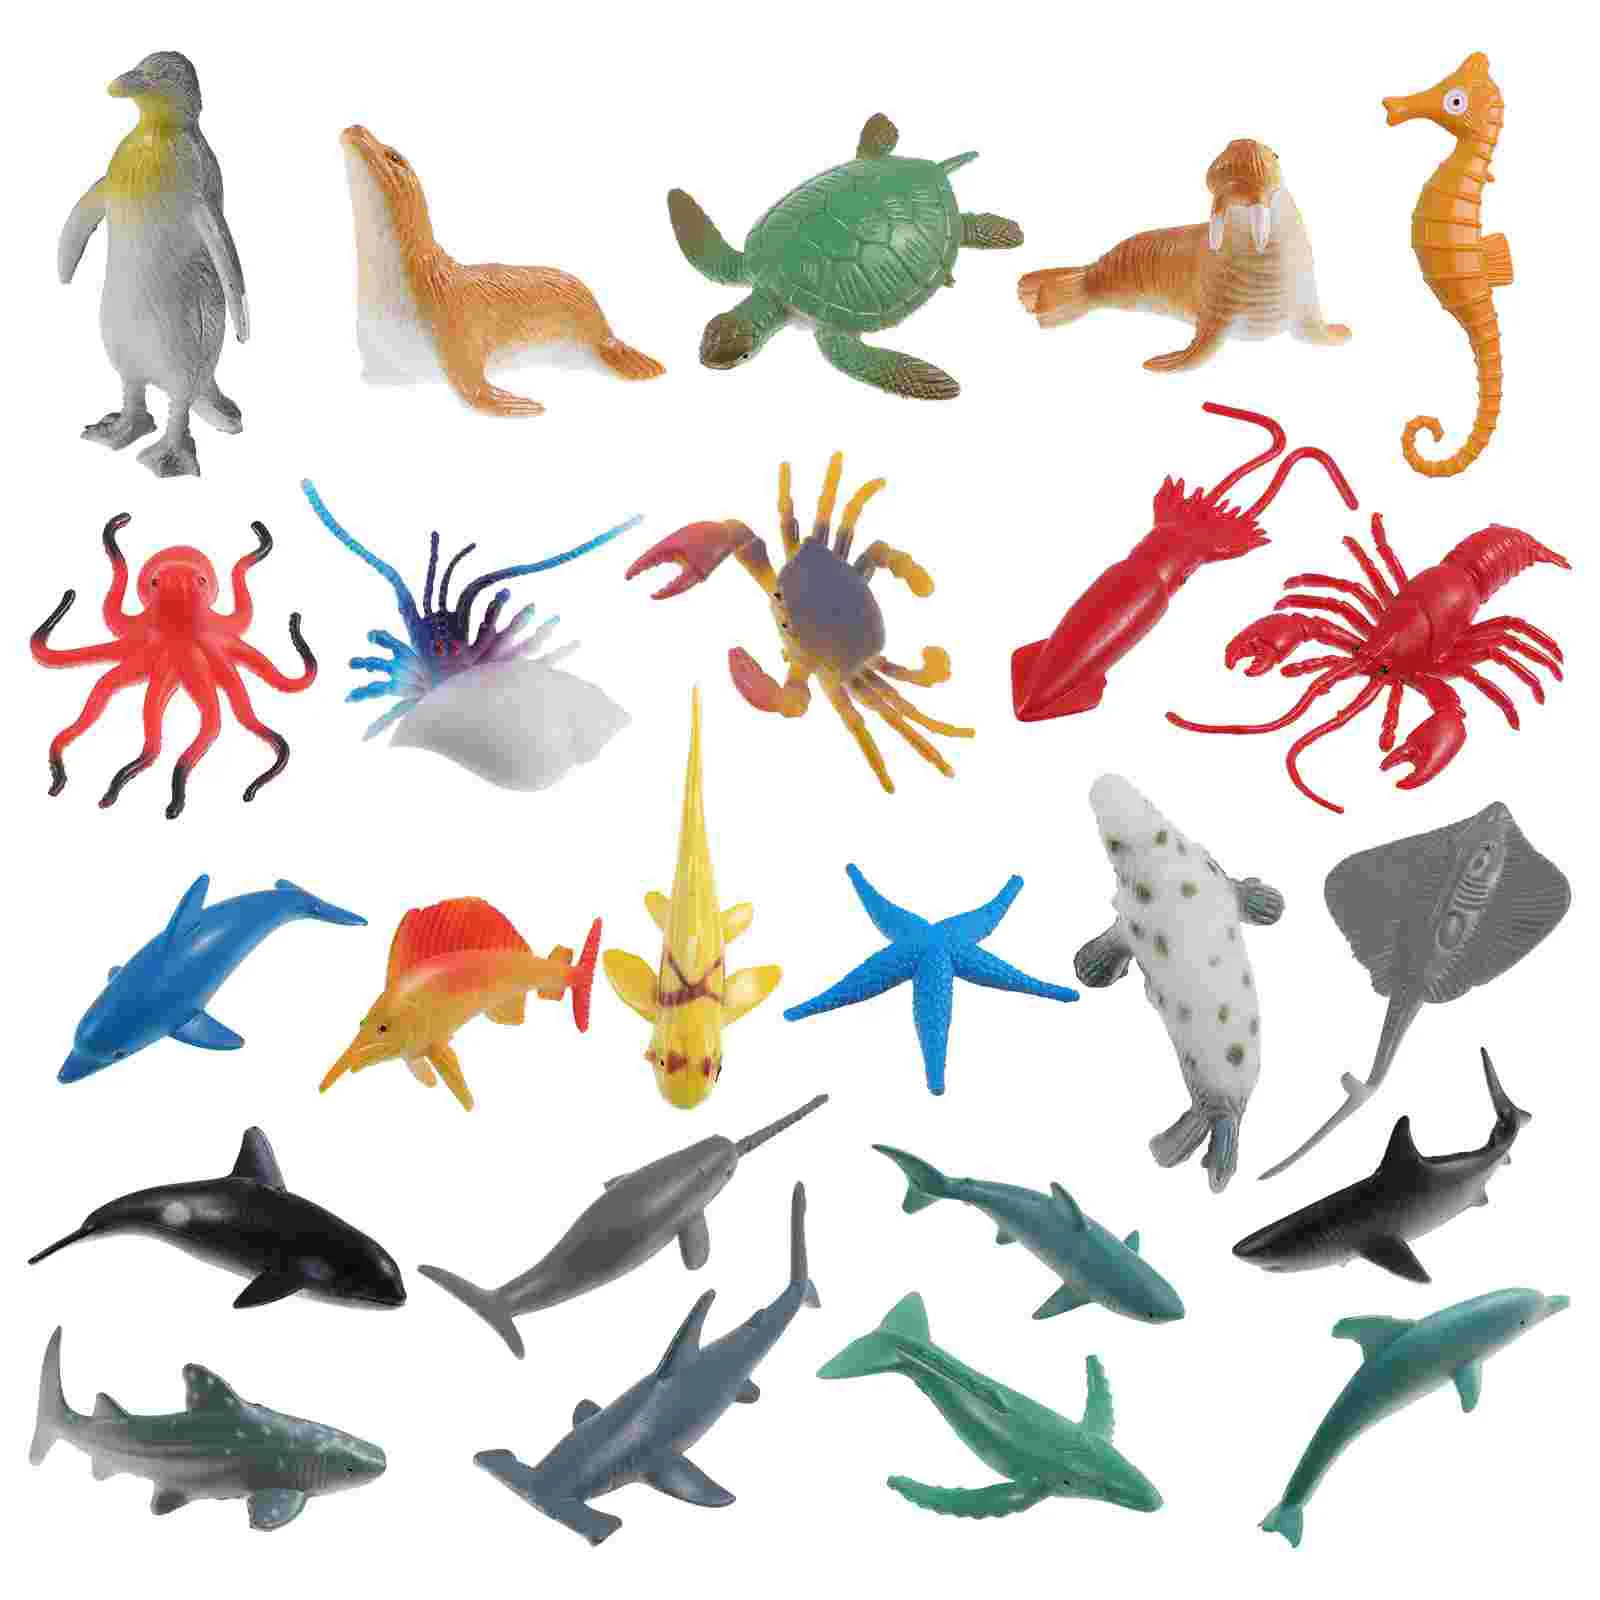 

Sea Animal Toys Figures Ocean Creatures Animals Kidsfigurinesturtle Decorations Stuffers Stocking Christmas Dolphin Party